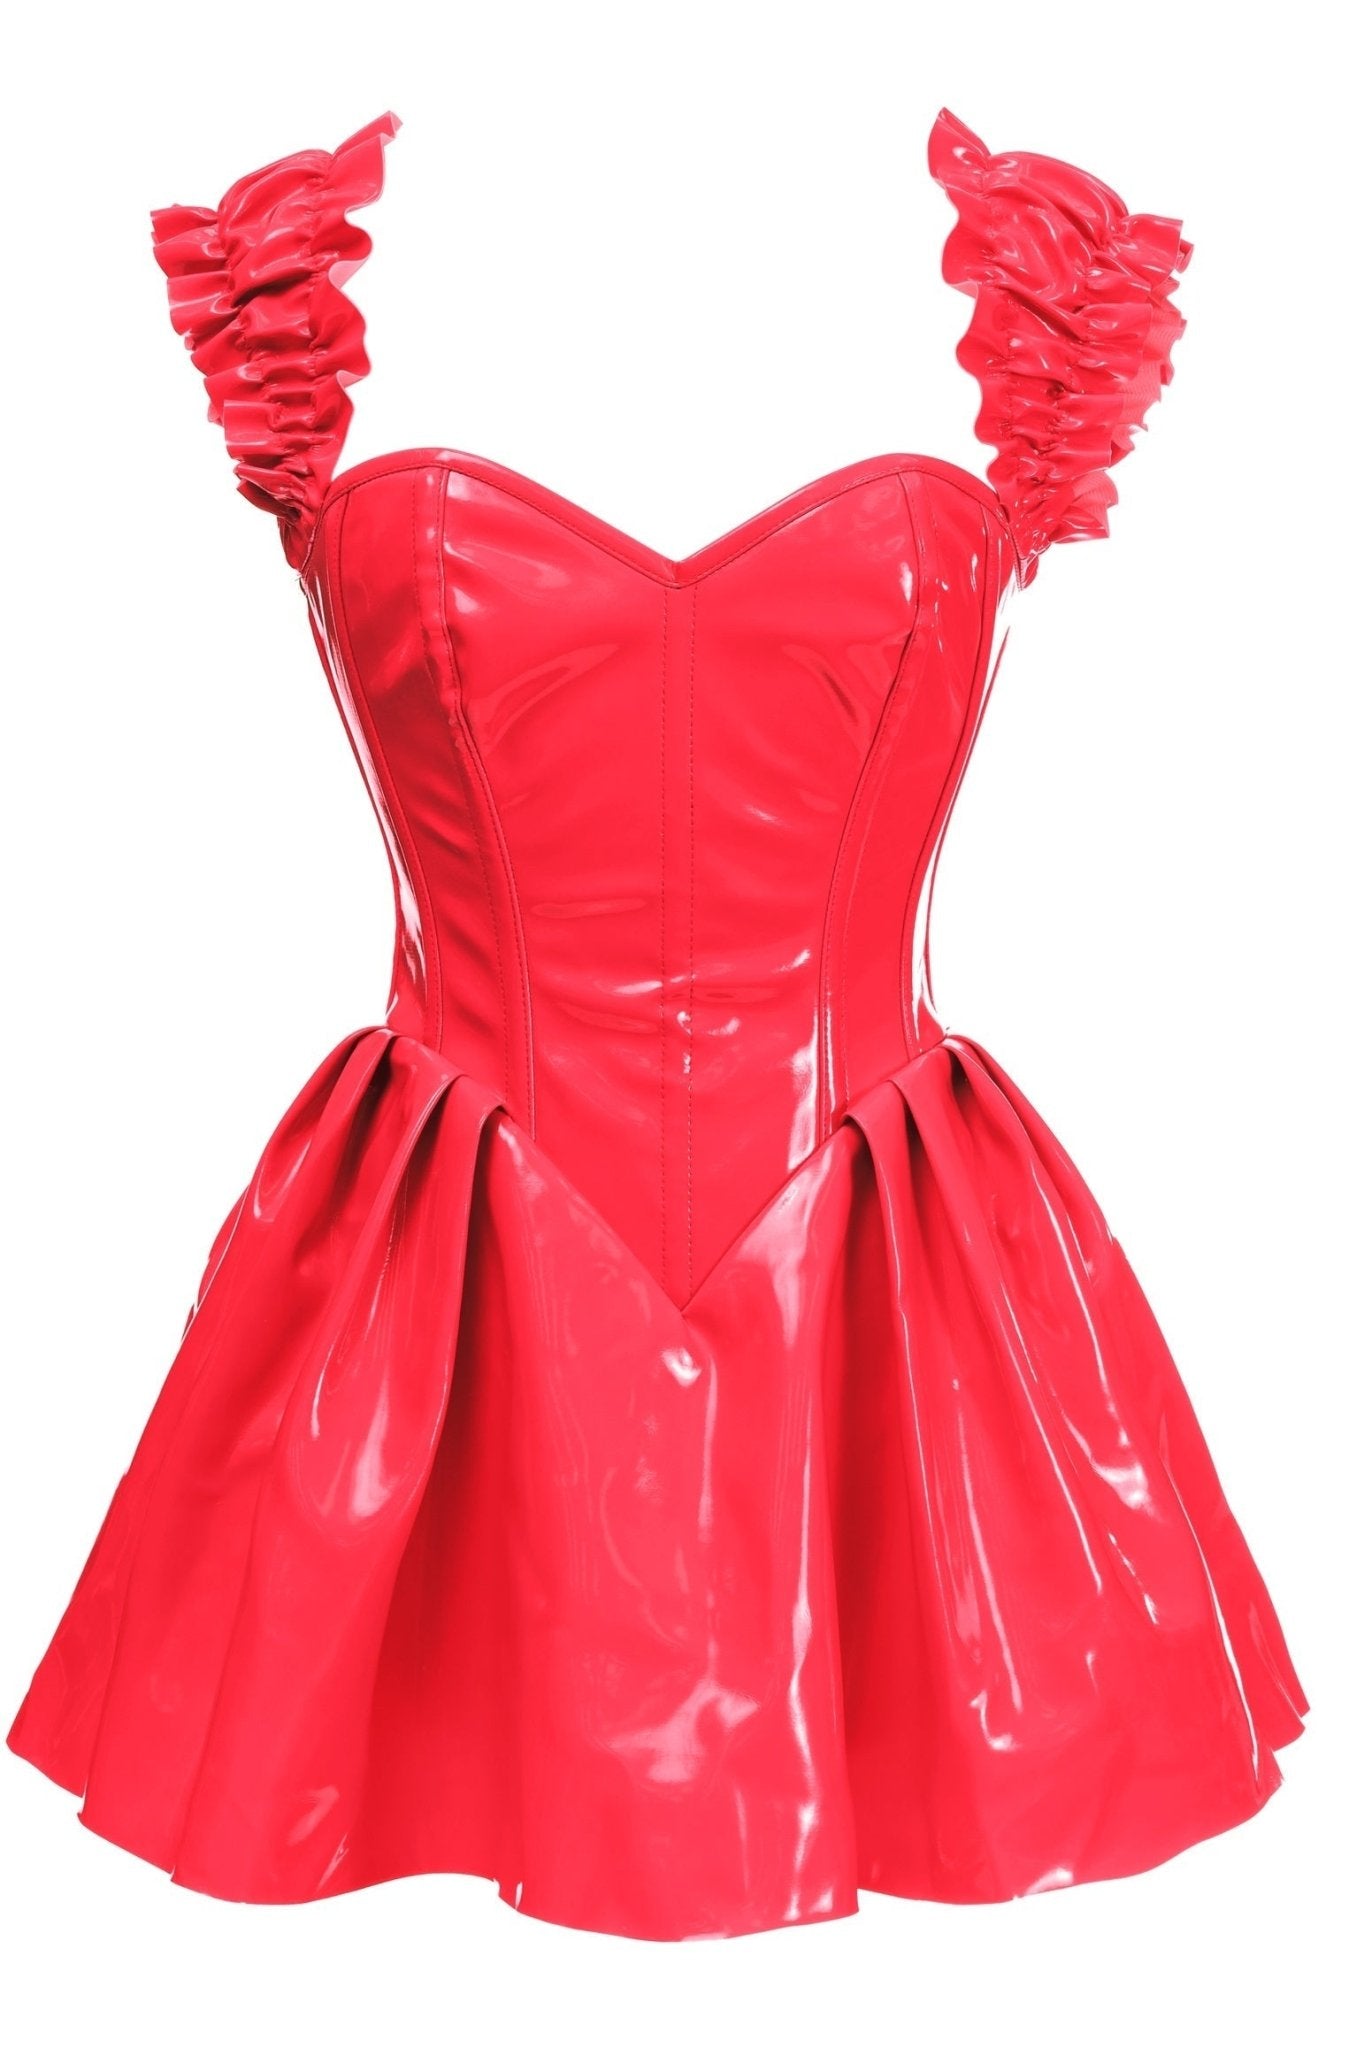 Luxurious Steel-Boned Glossy Red Vinyl Corset DressMusotica.com